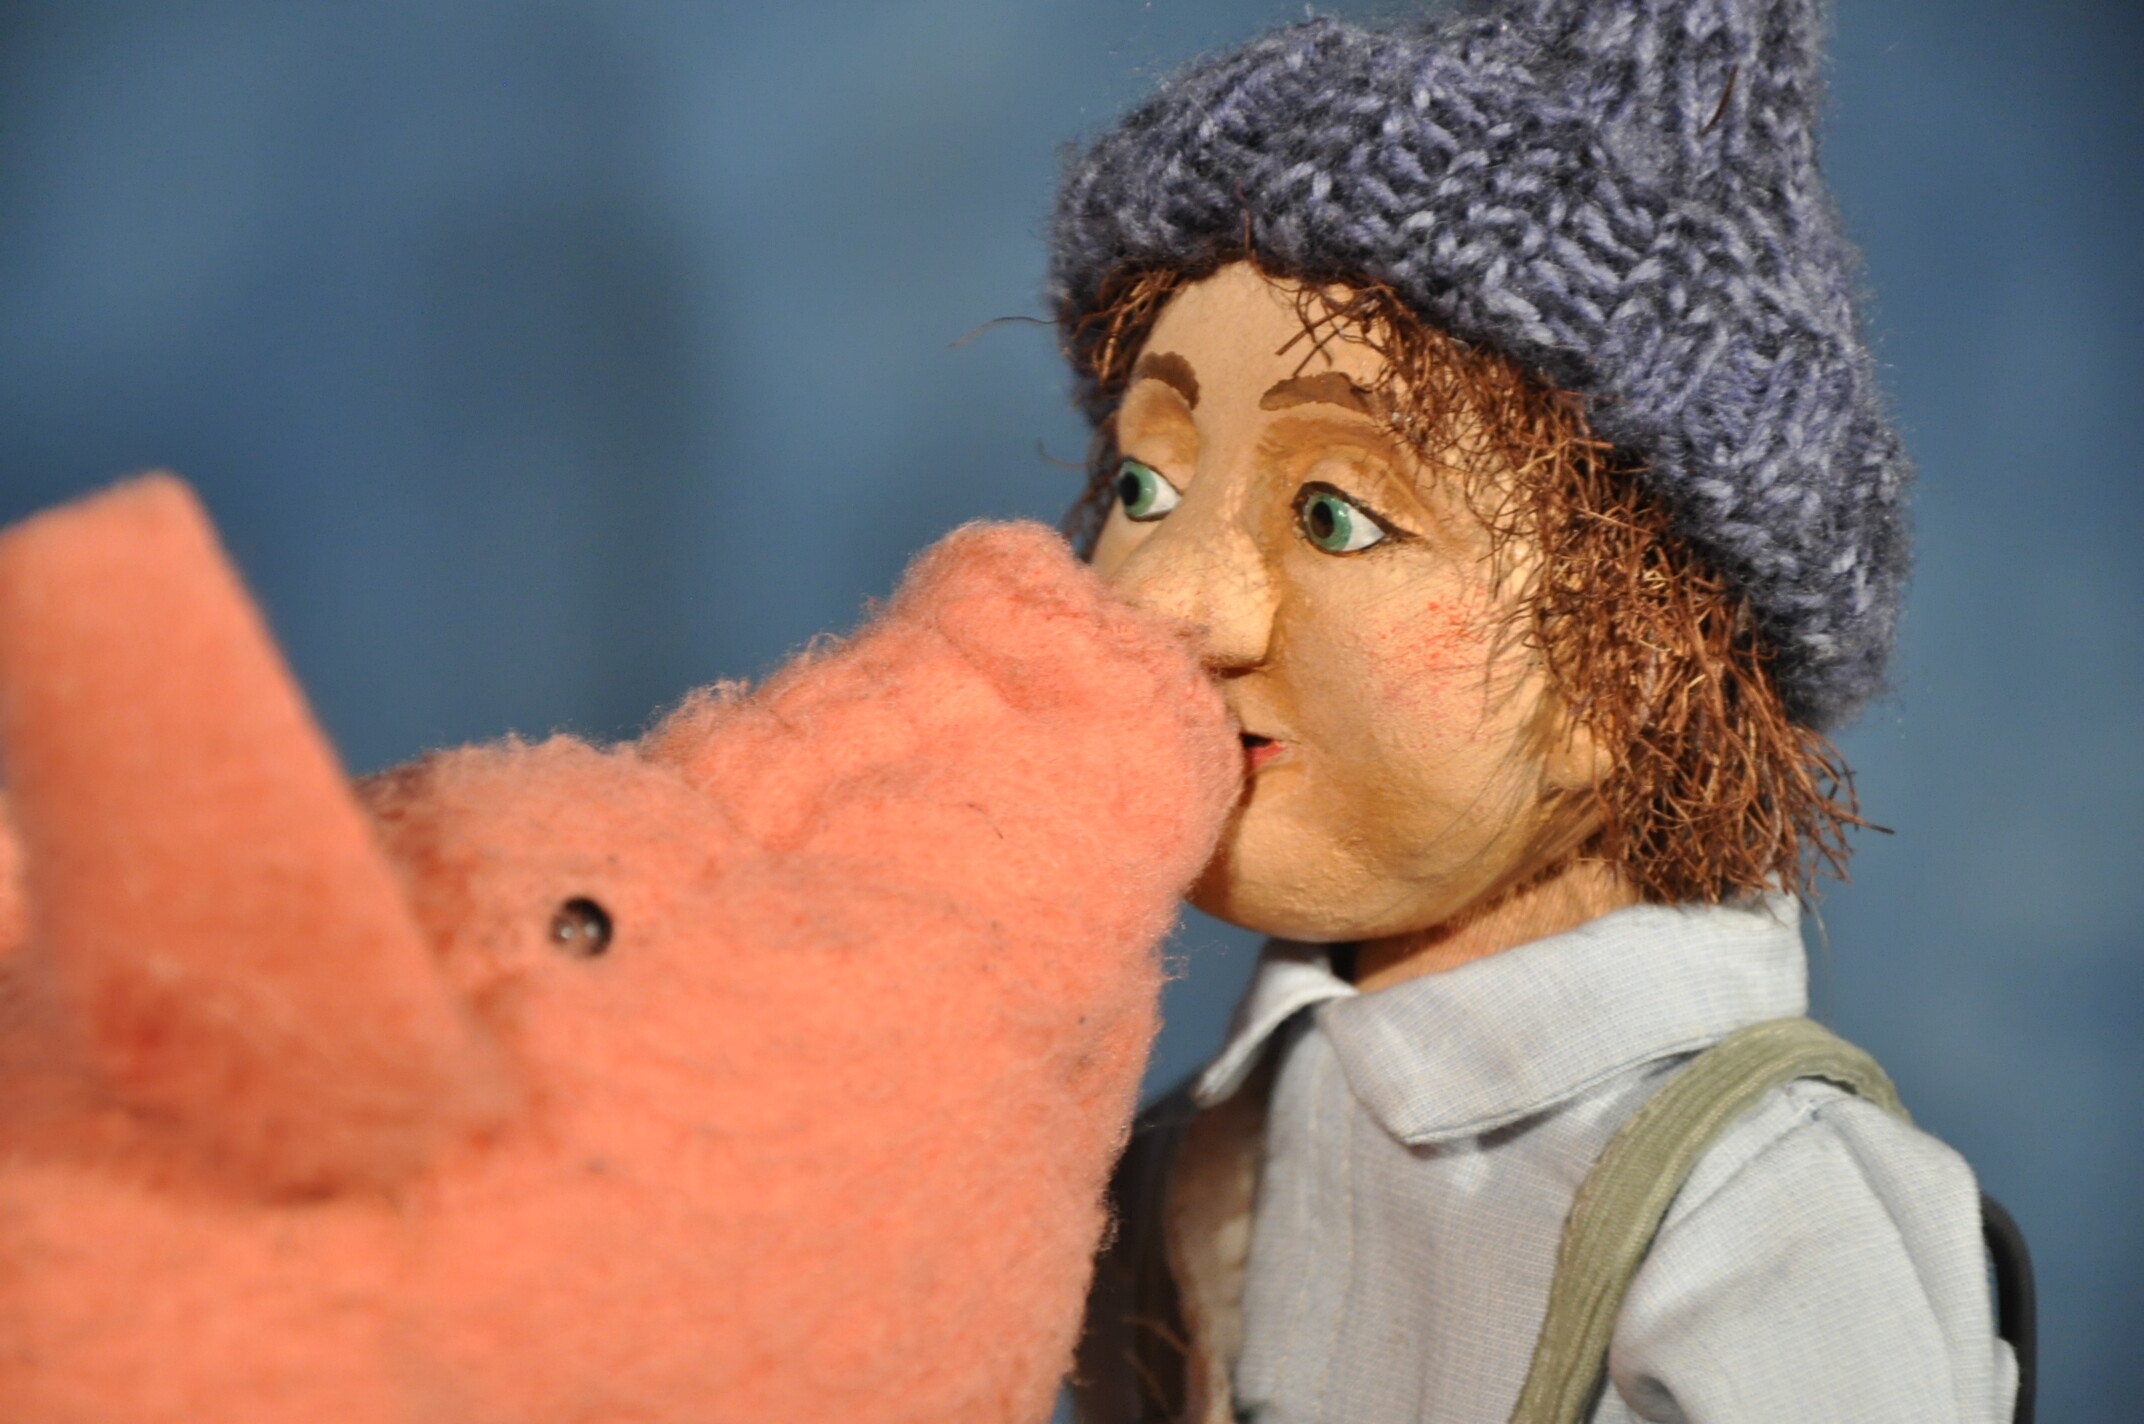 Foto: Puppenspiel “Hans im Glück”. Fotoautor: puppen.etc - Theater mit Figuren